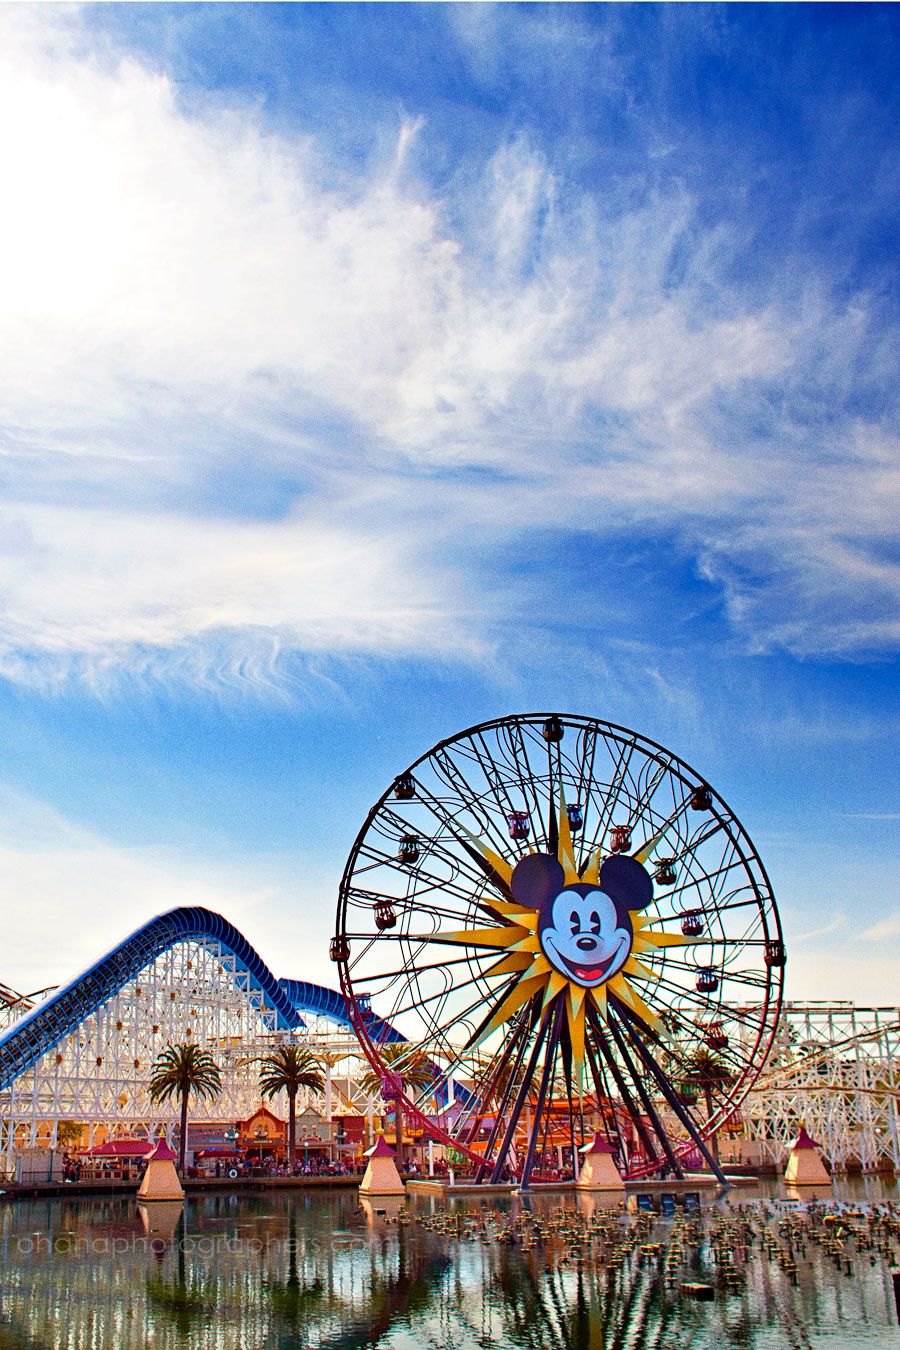 disneyland, california adventure. Disneyland photography, Disneyland california adventure, Disneyland picture